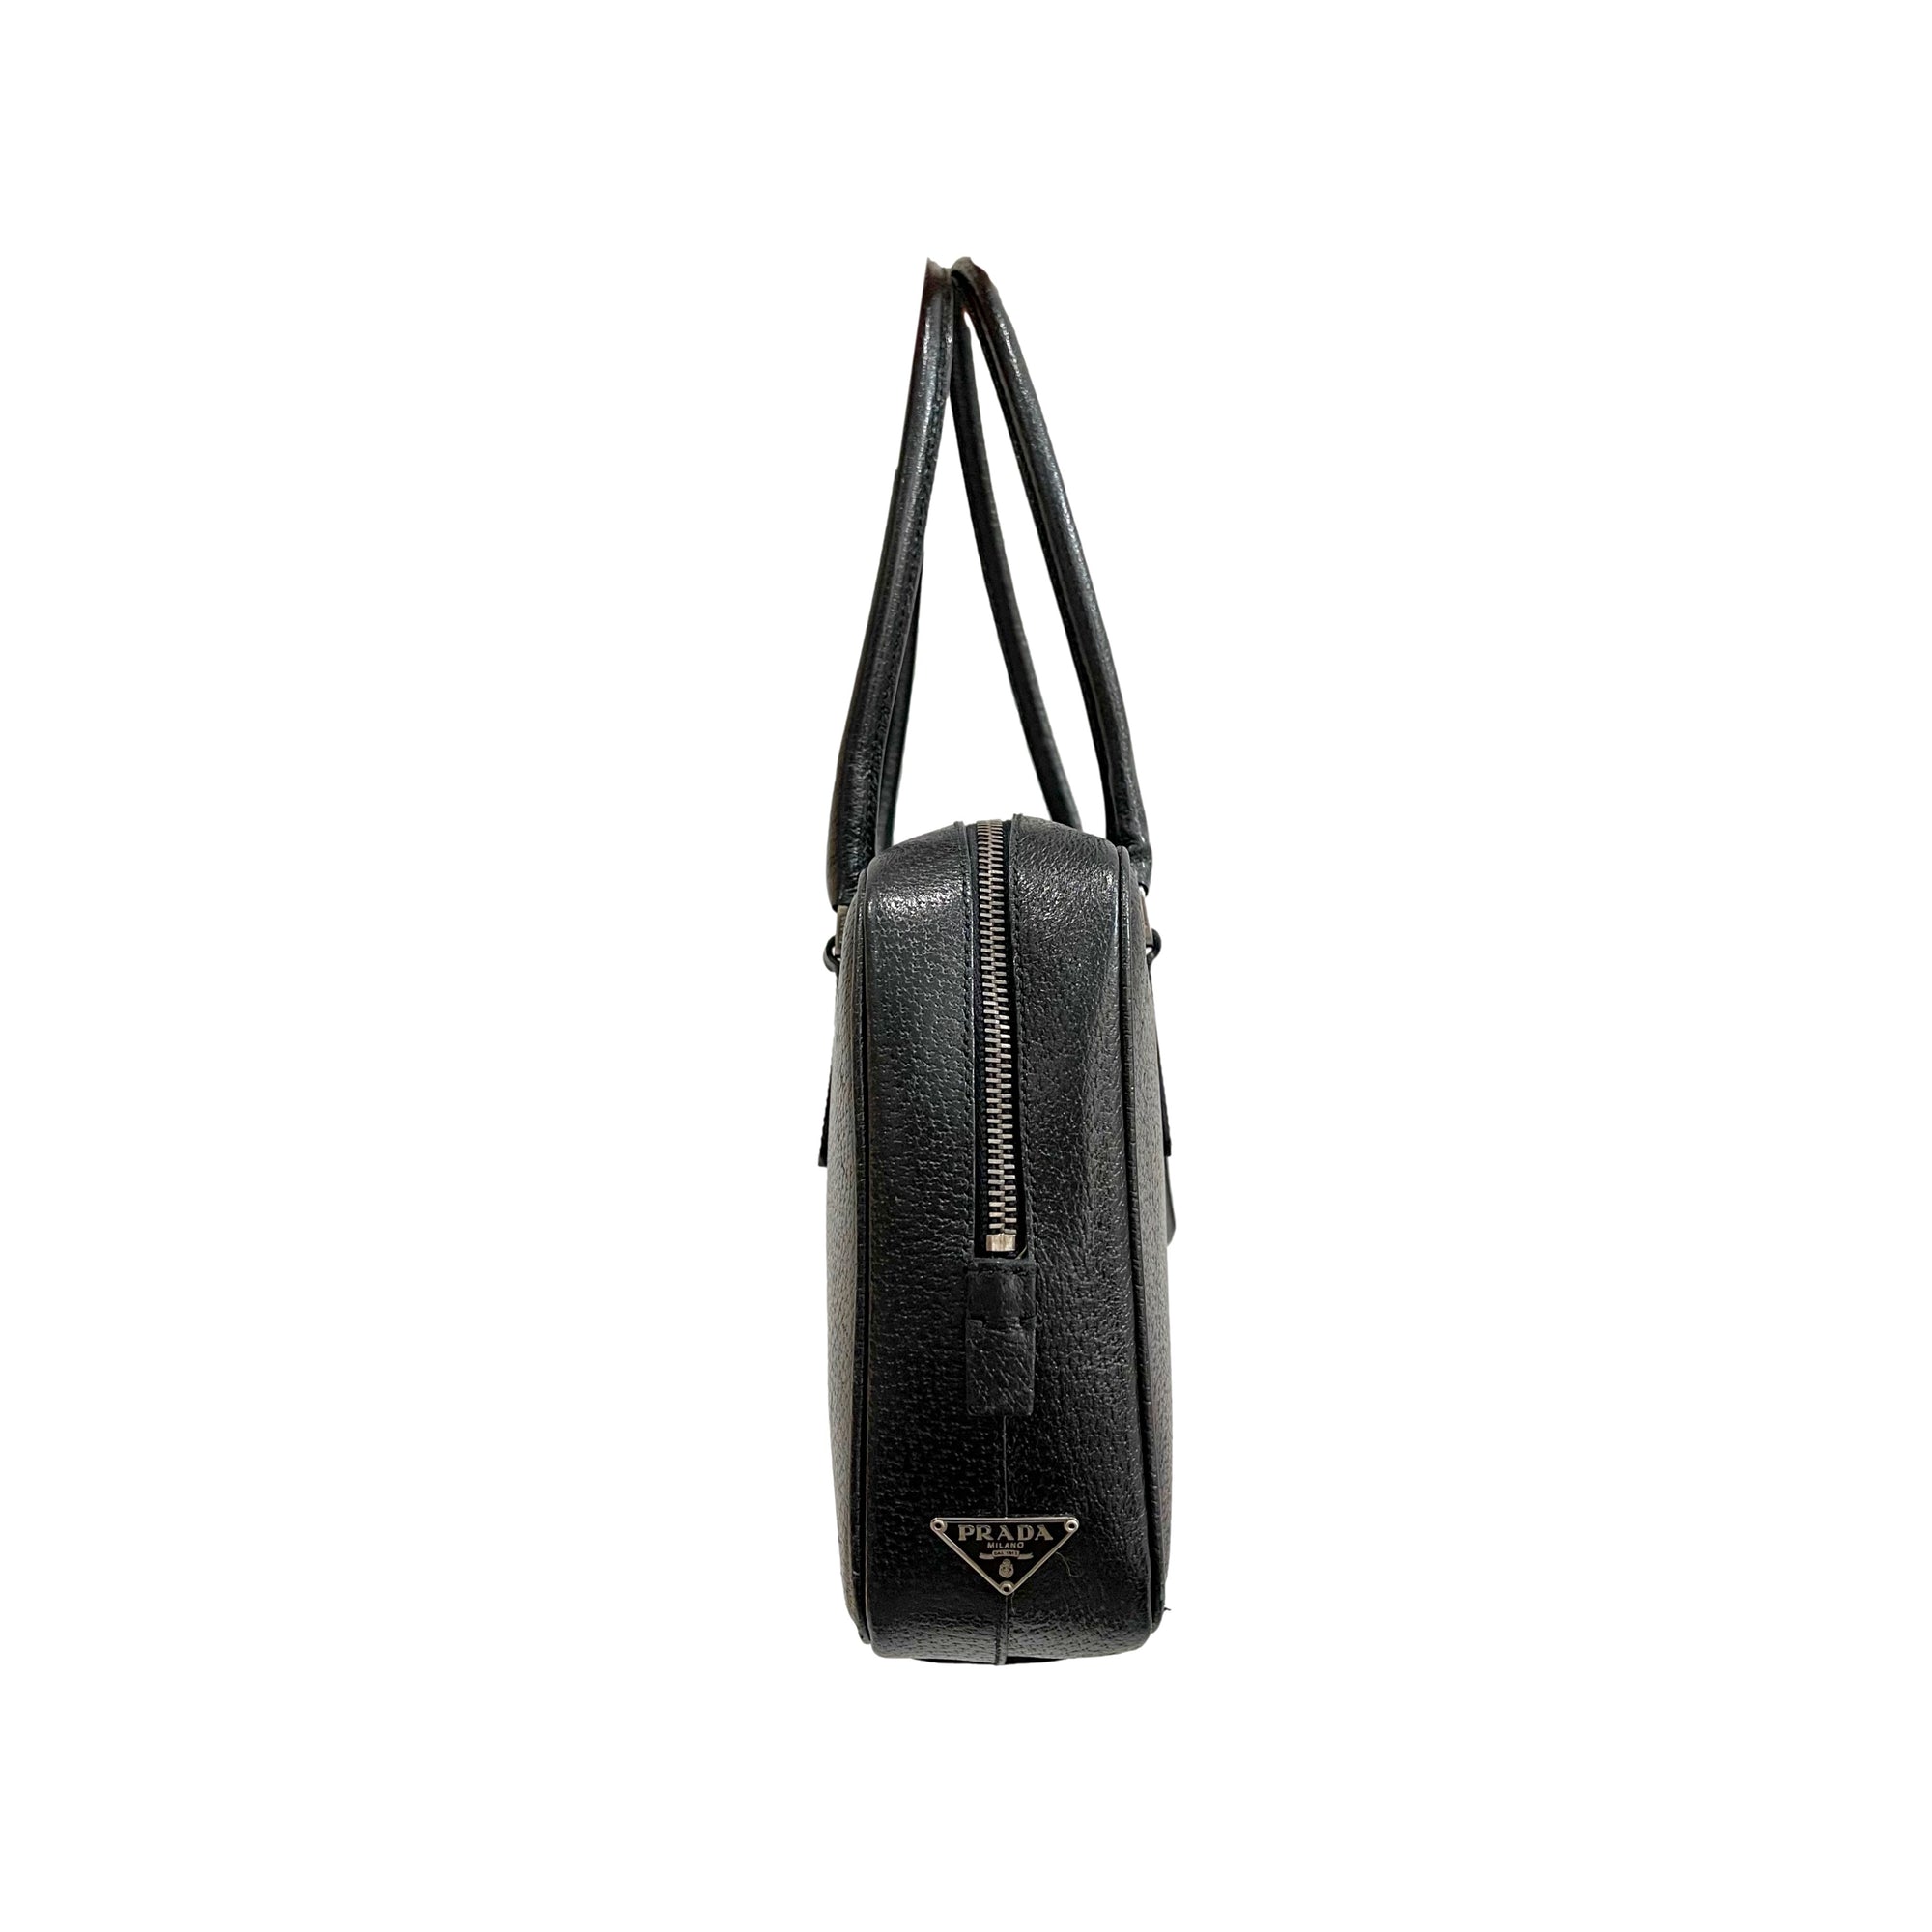 Prada Black Leather Shoulder Bag - Handbags